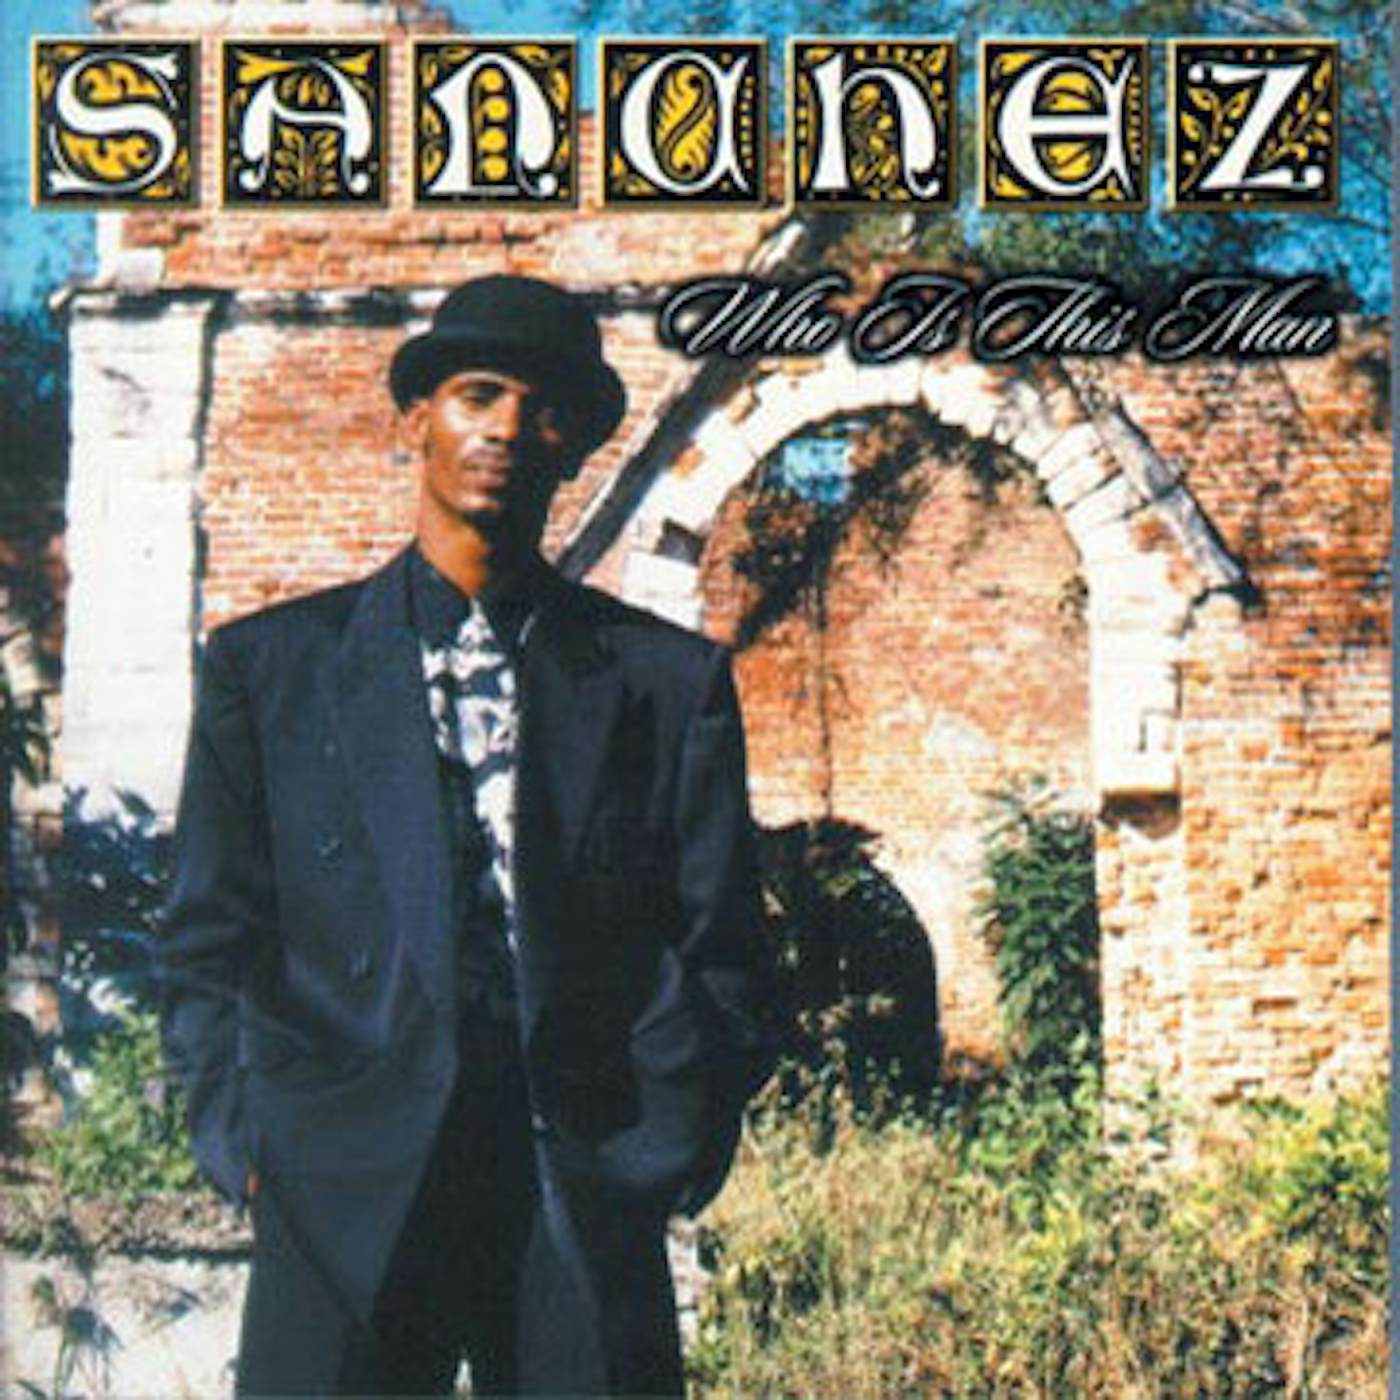 Sanchez WHO IS THE MAN Vinyl Record